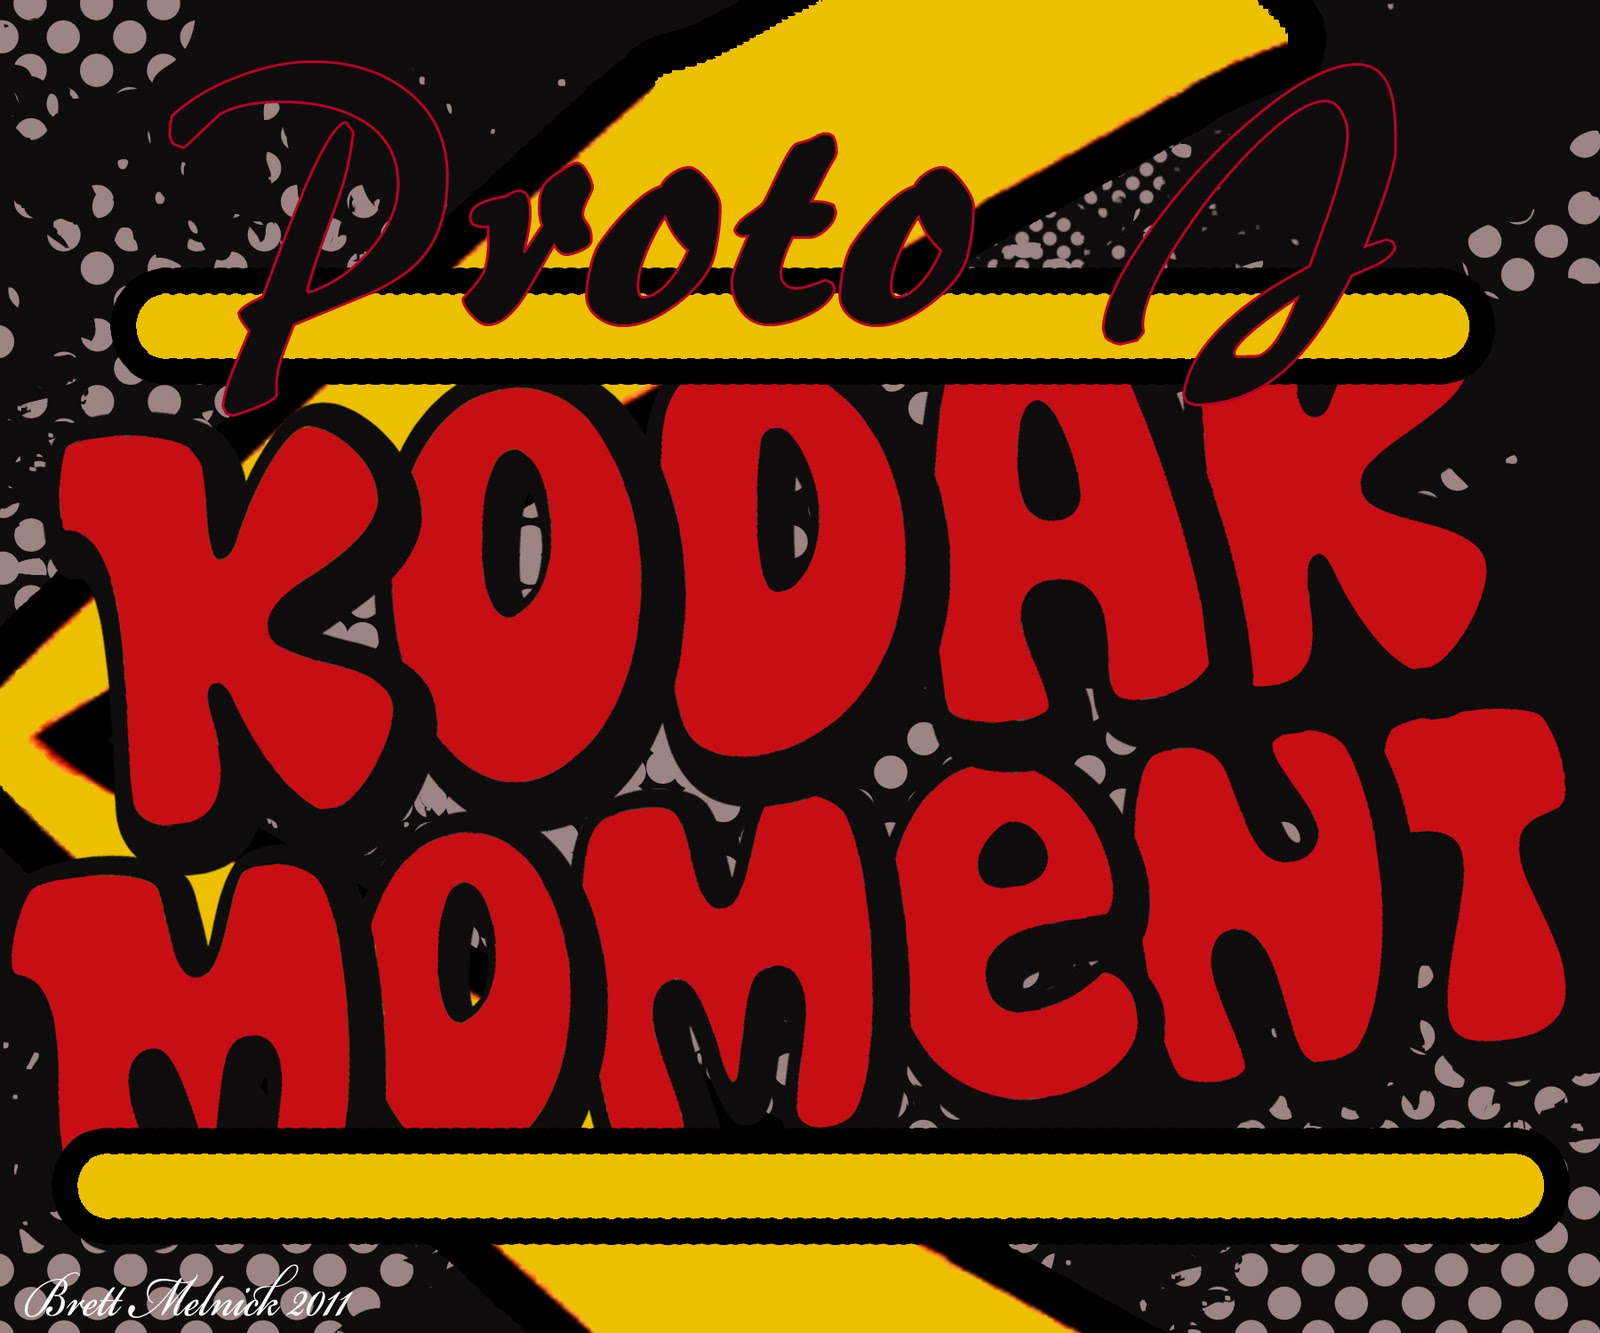 The Kodak Moment - 2020s Craziest Stock - YouTube